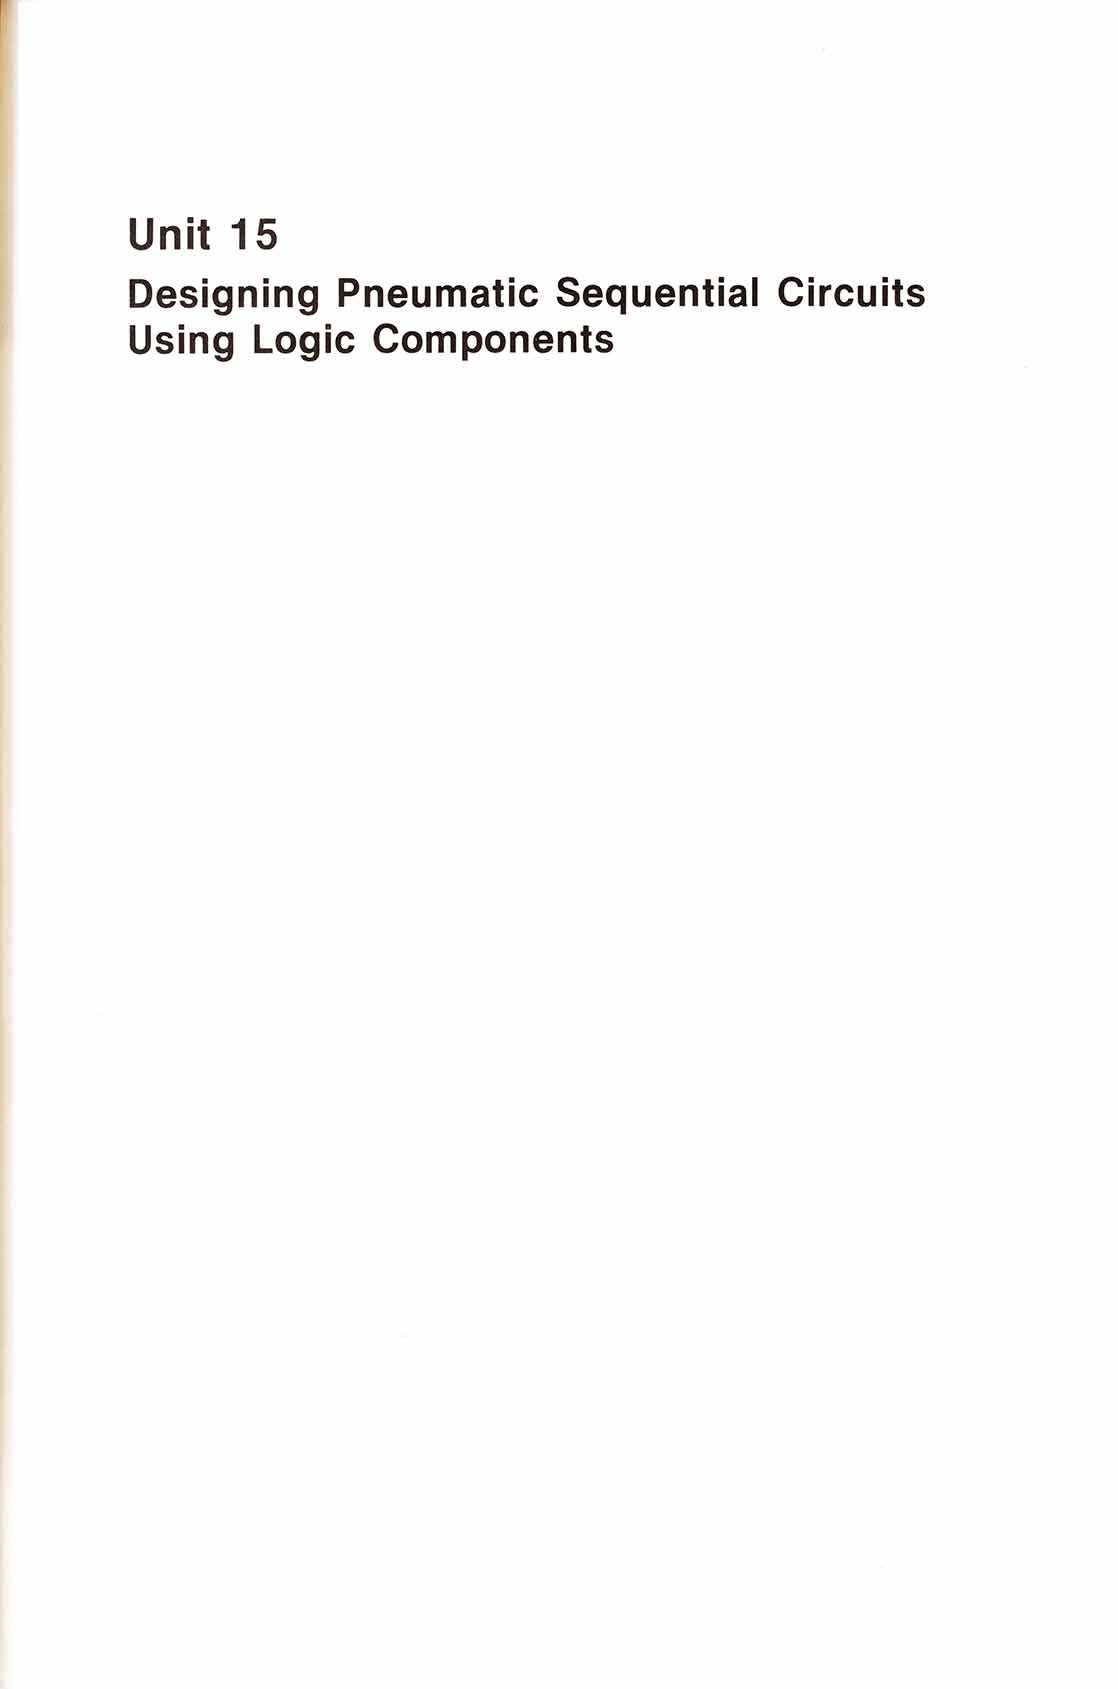 Instrumentation and control [Volume 2 - unit 15-18]